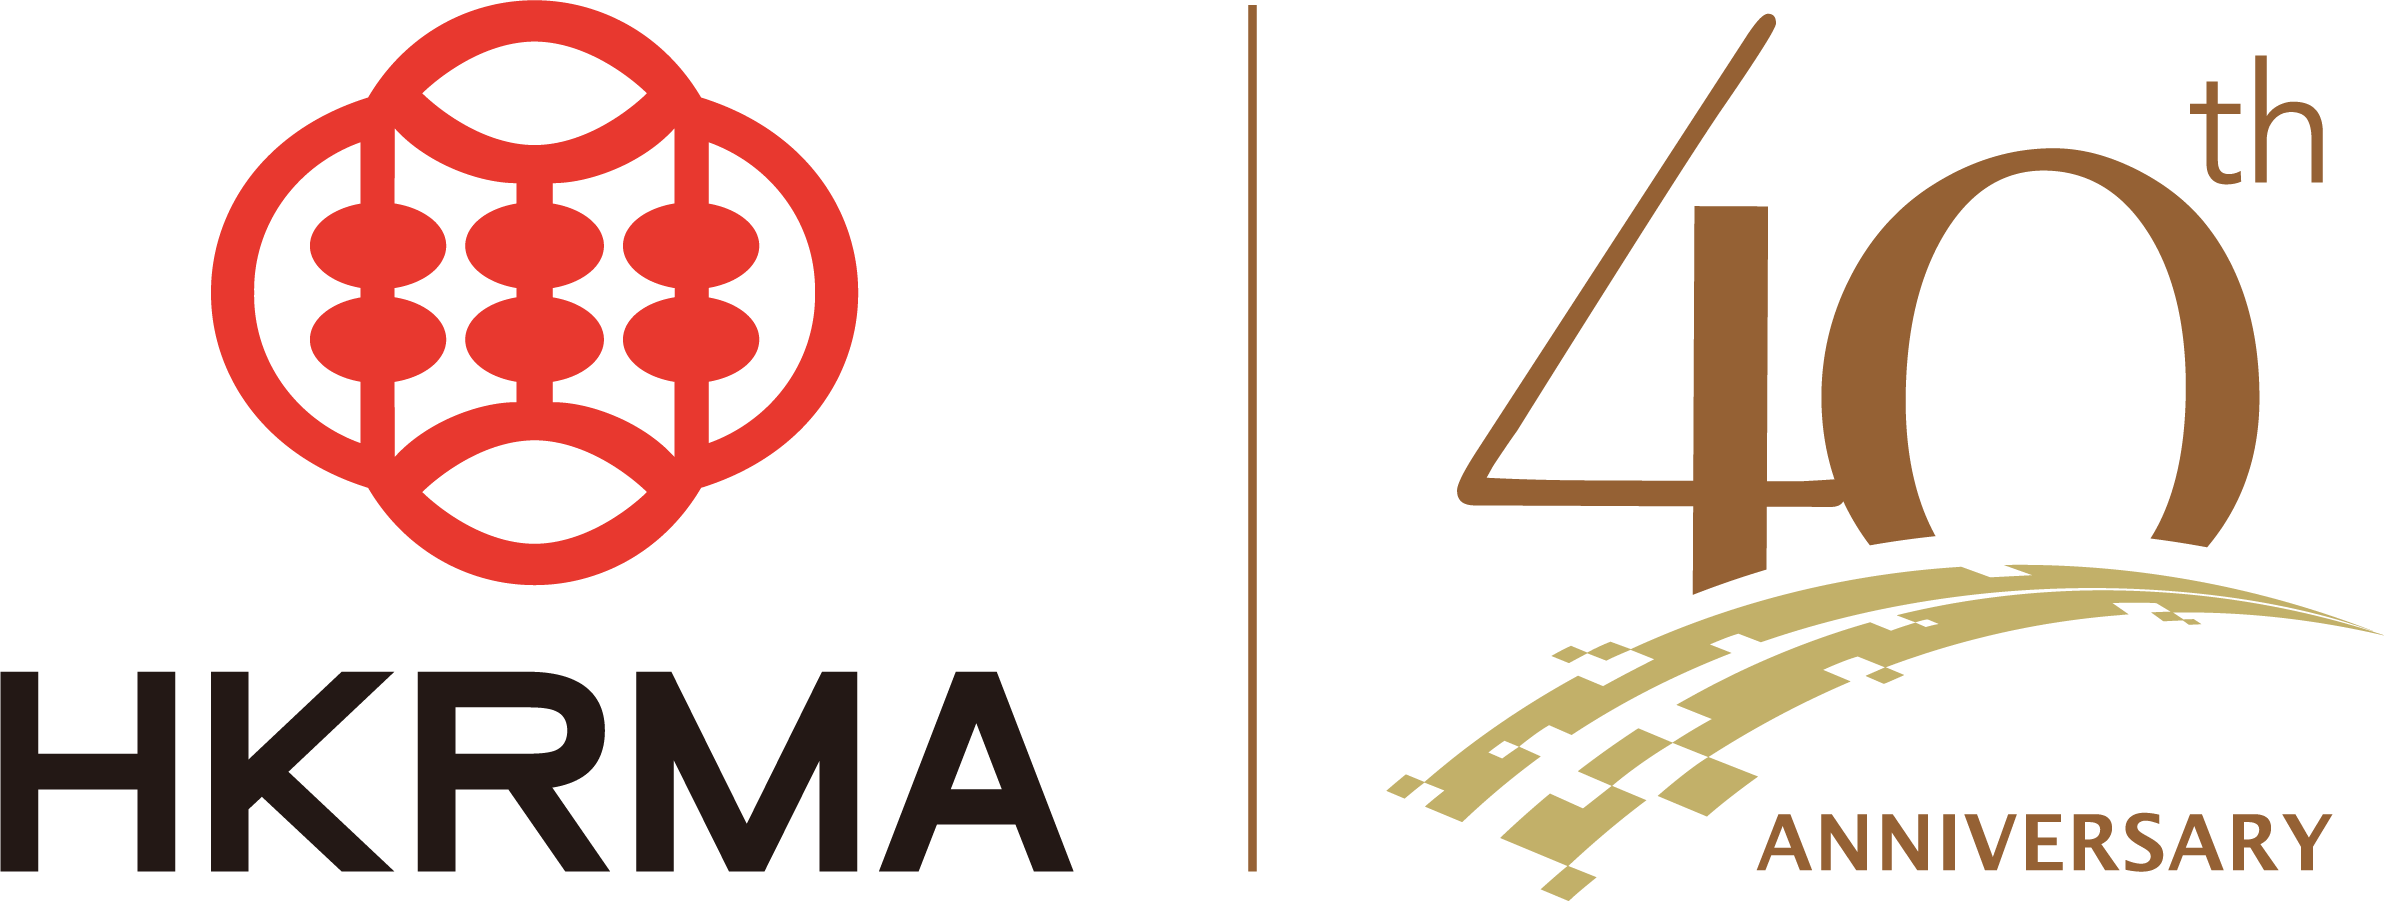 HKRMA_40_anniversary-logo